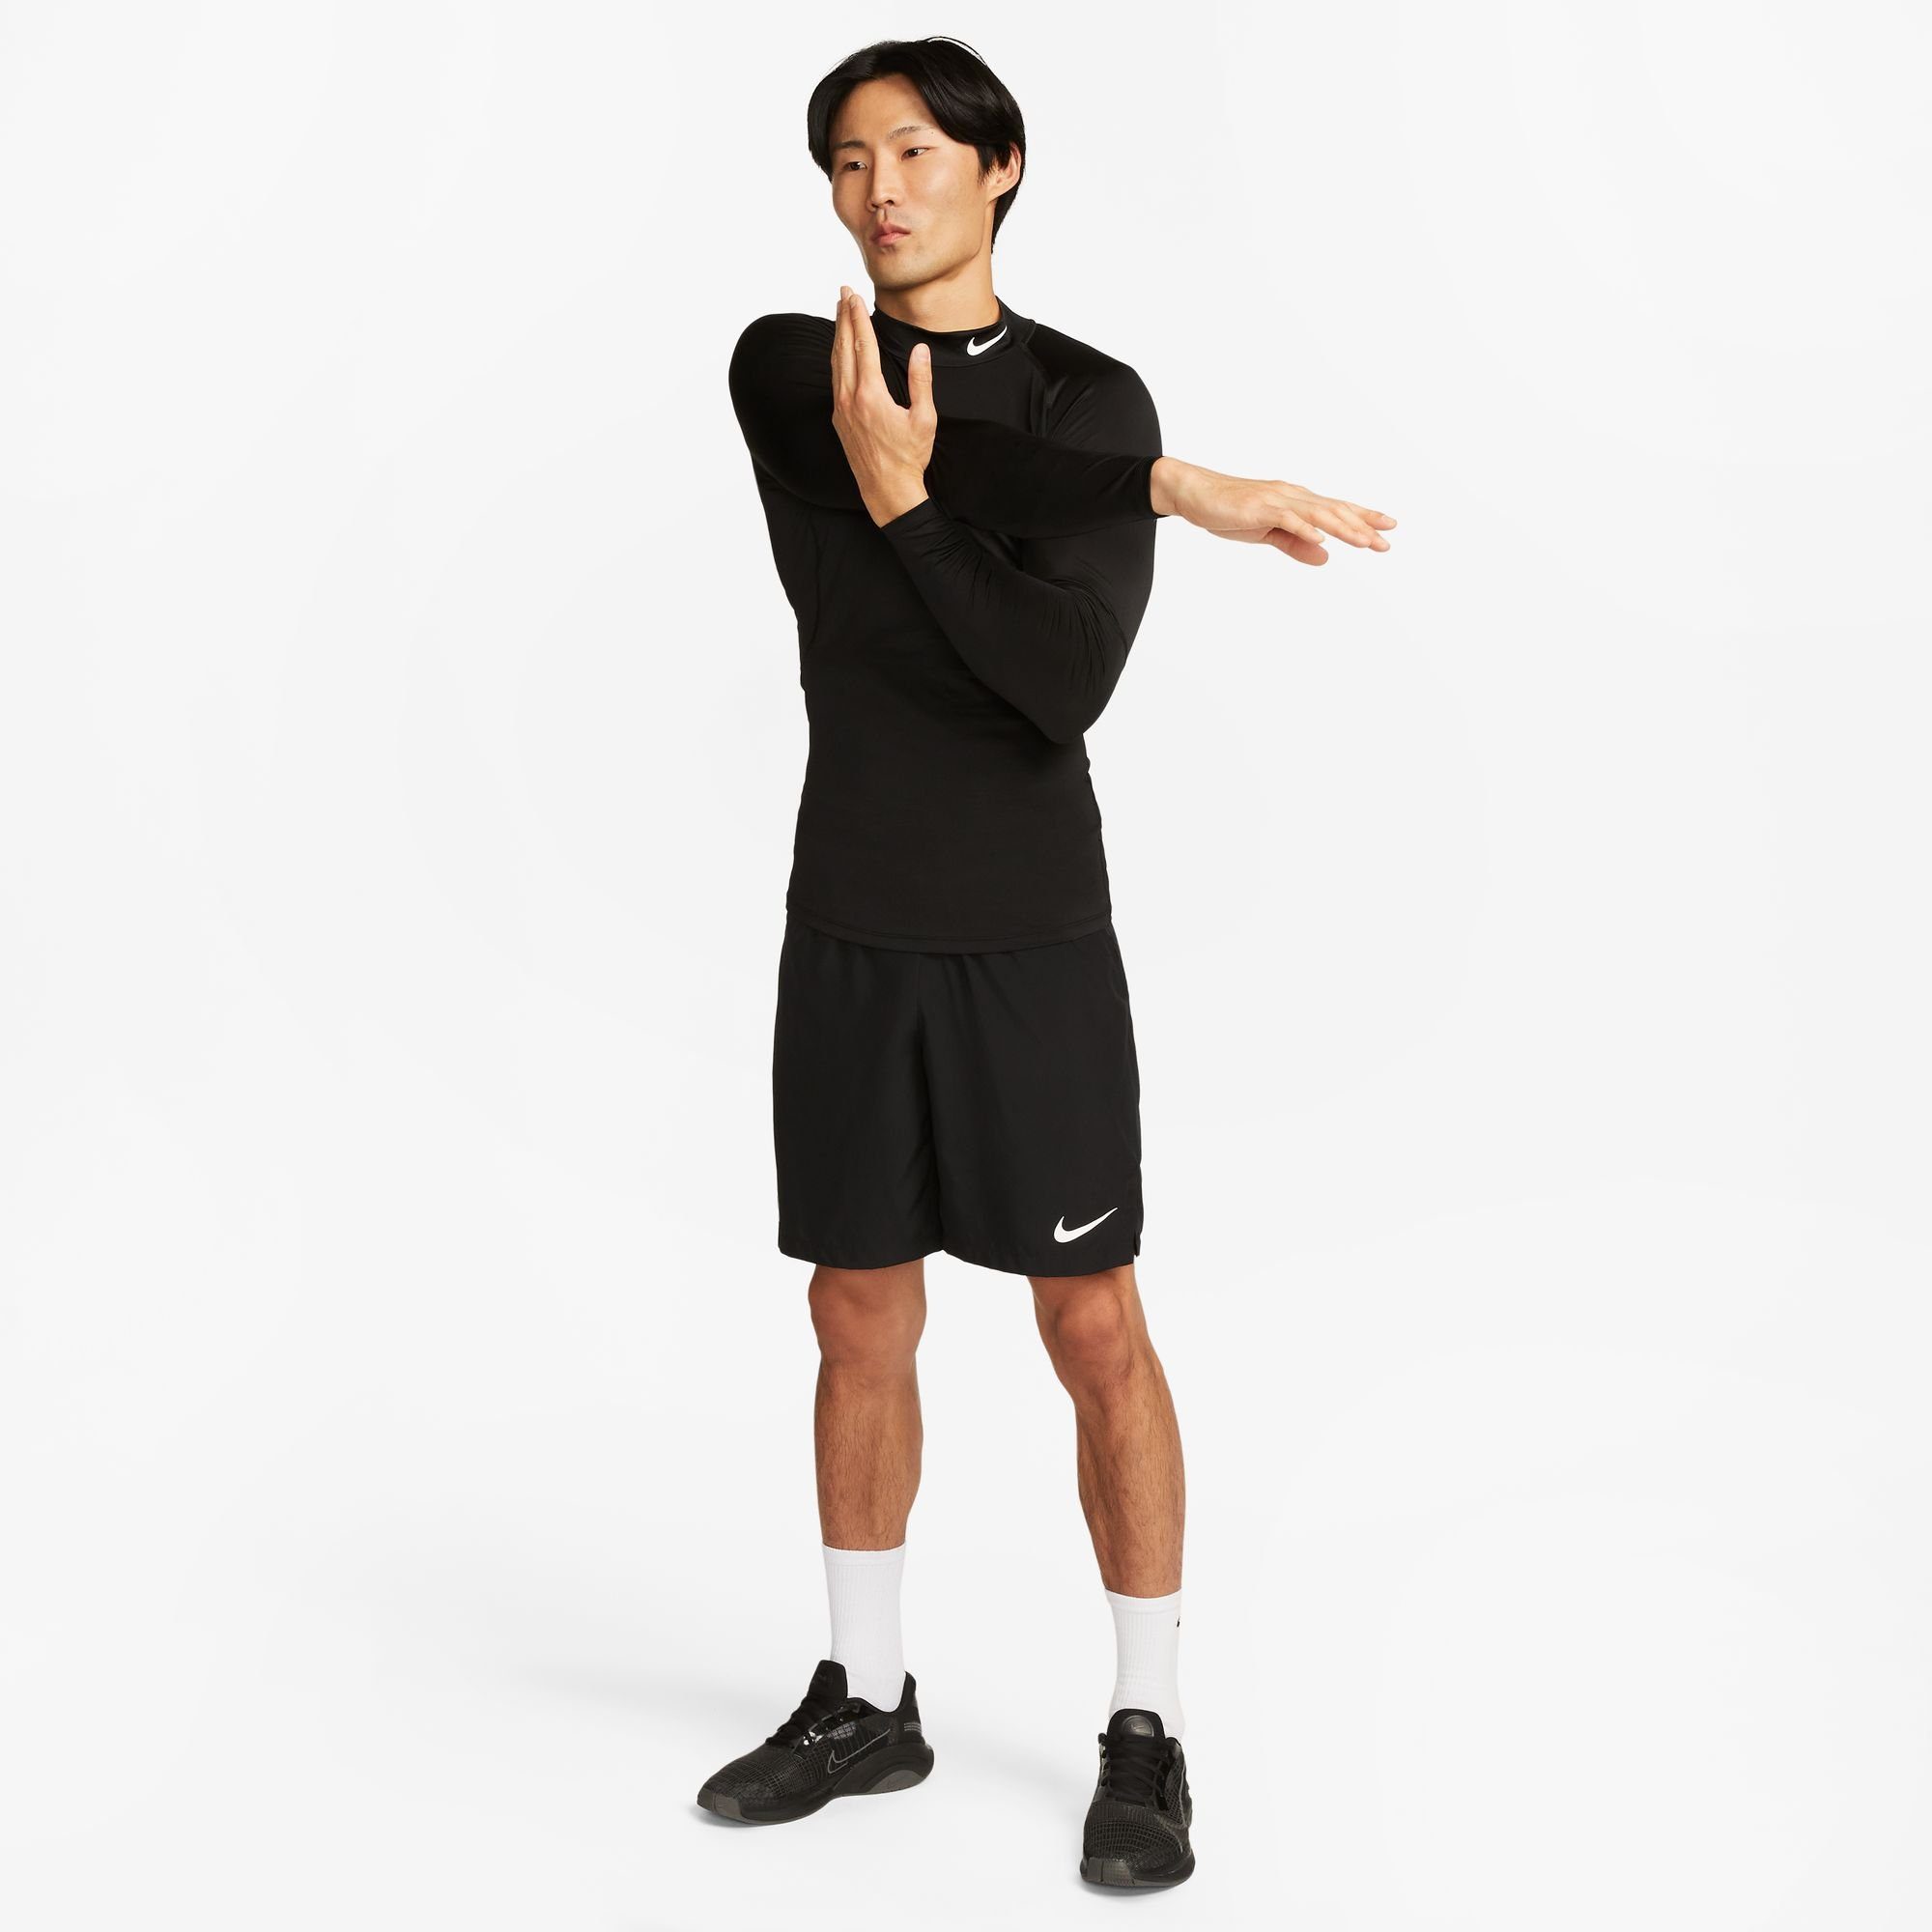 MEN'S MOCK-NECK Nike Trainingsshirt TIGHT-FITTING TOP LONG-SLEEVE PRO DRI-FIT